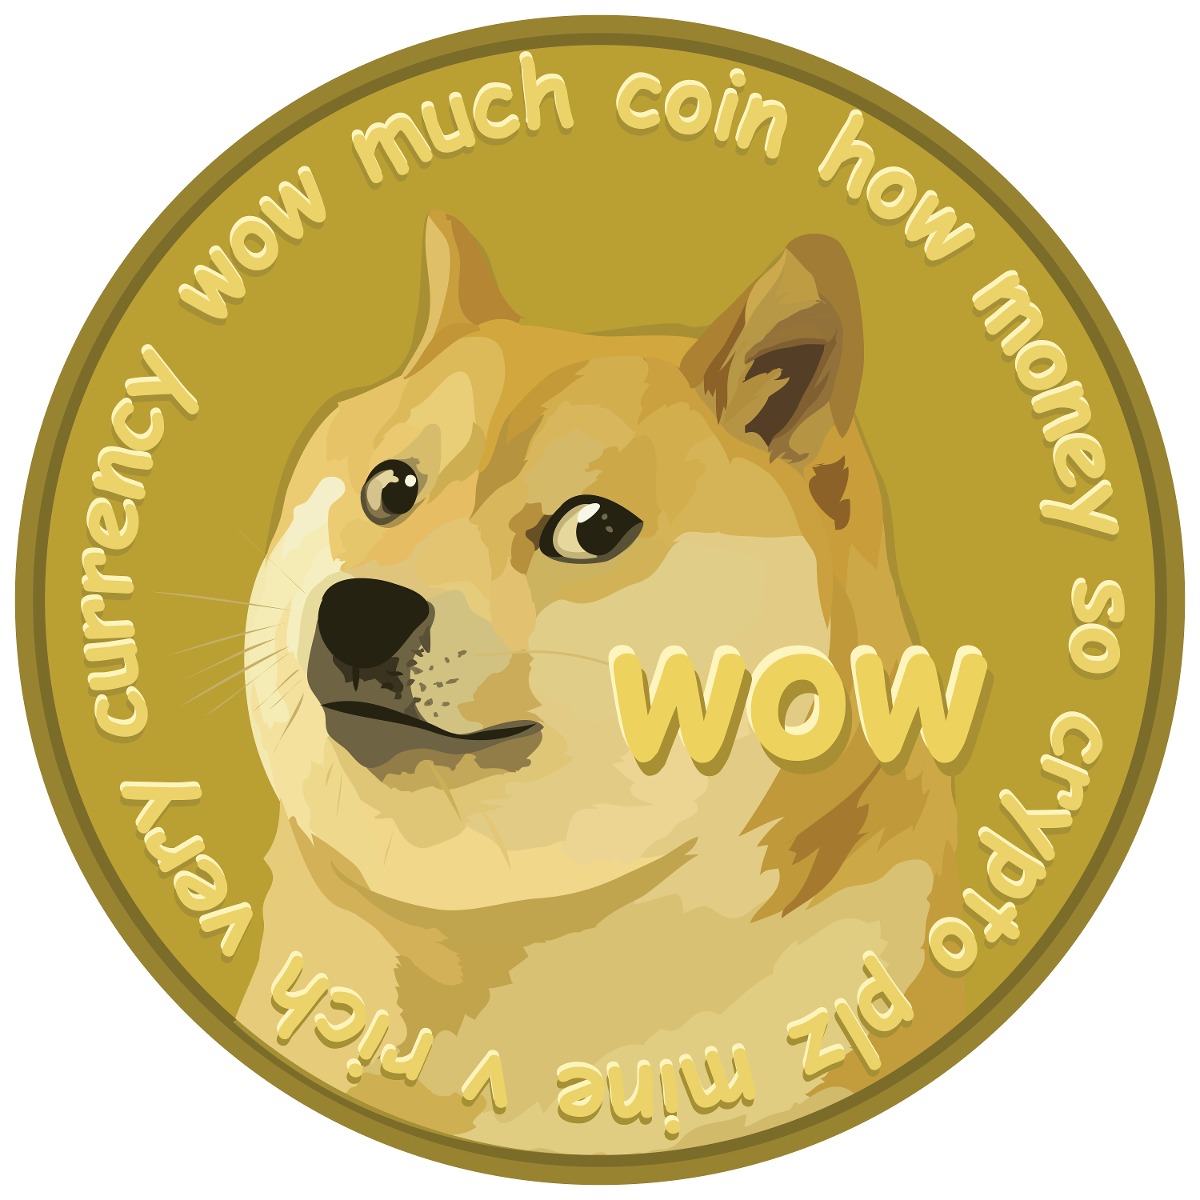 can dogecoin be bitcoin